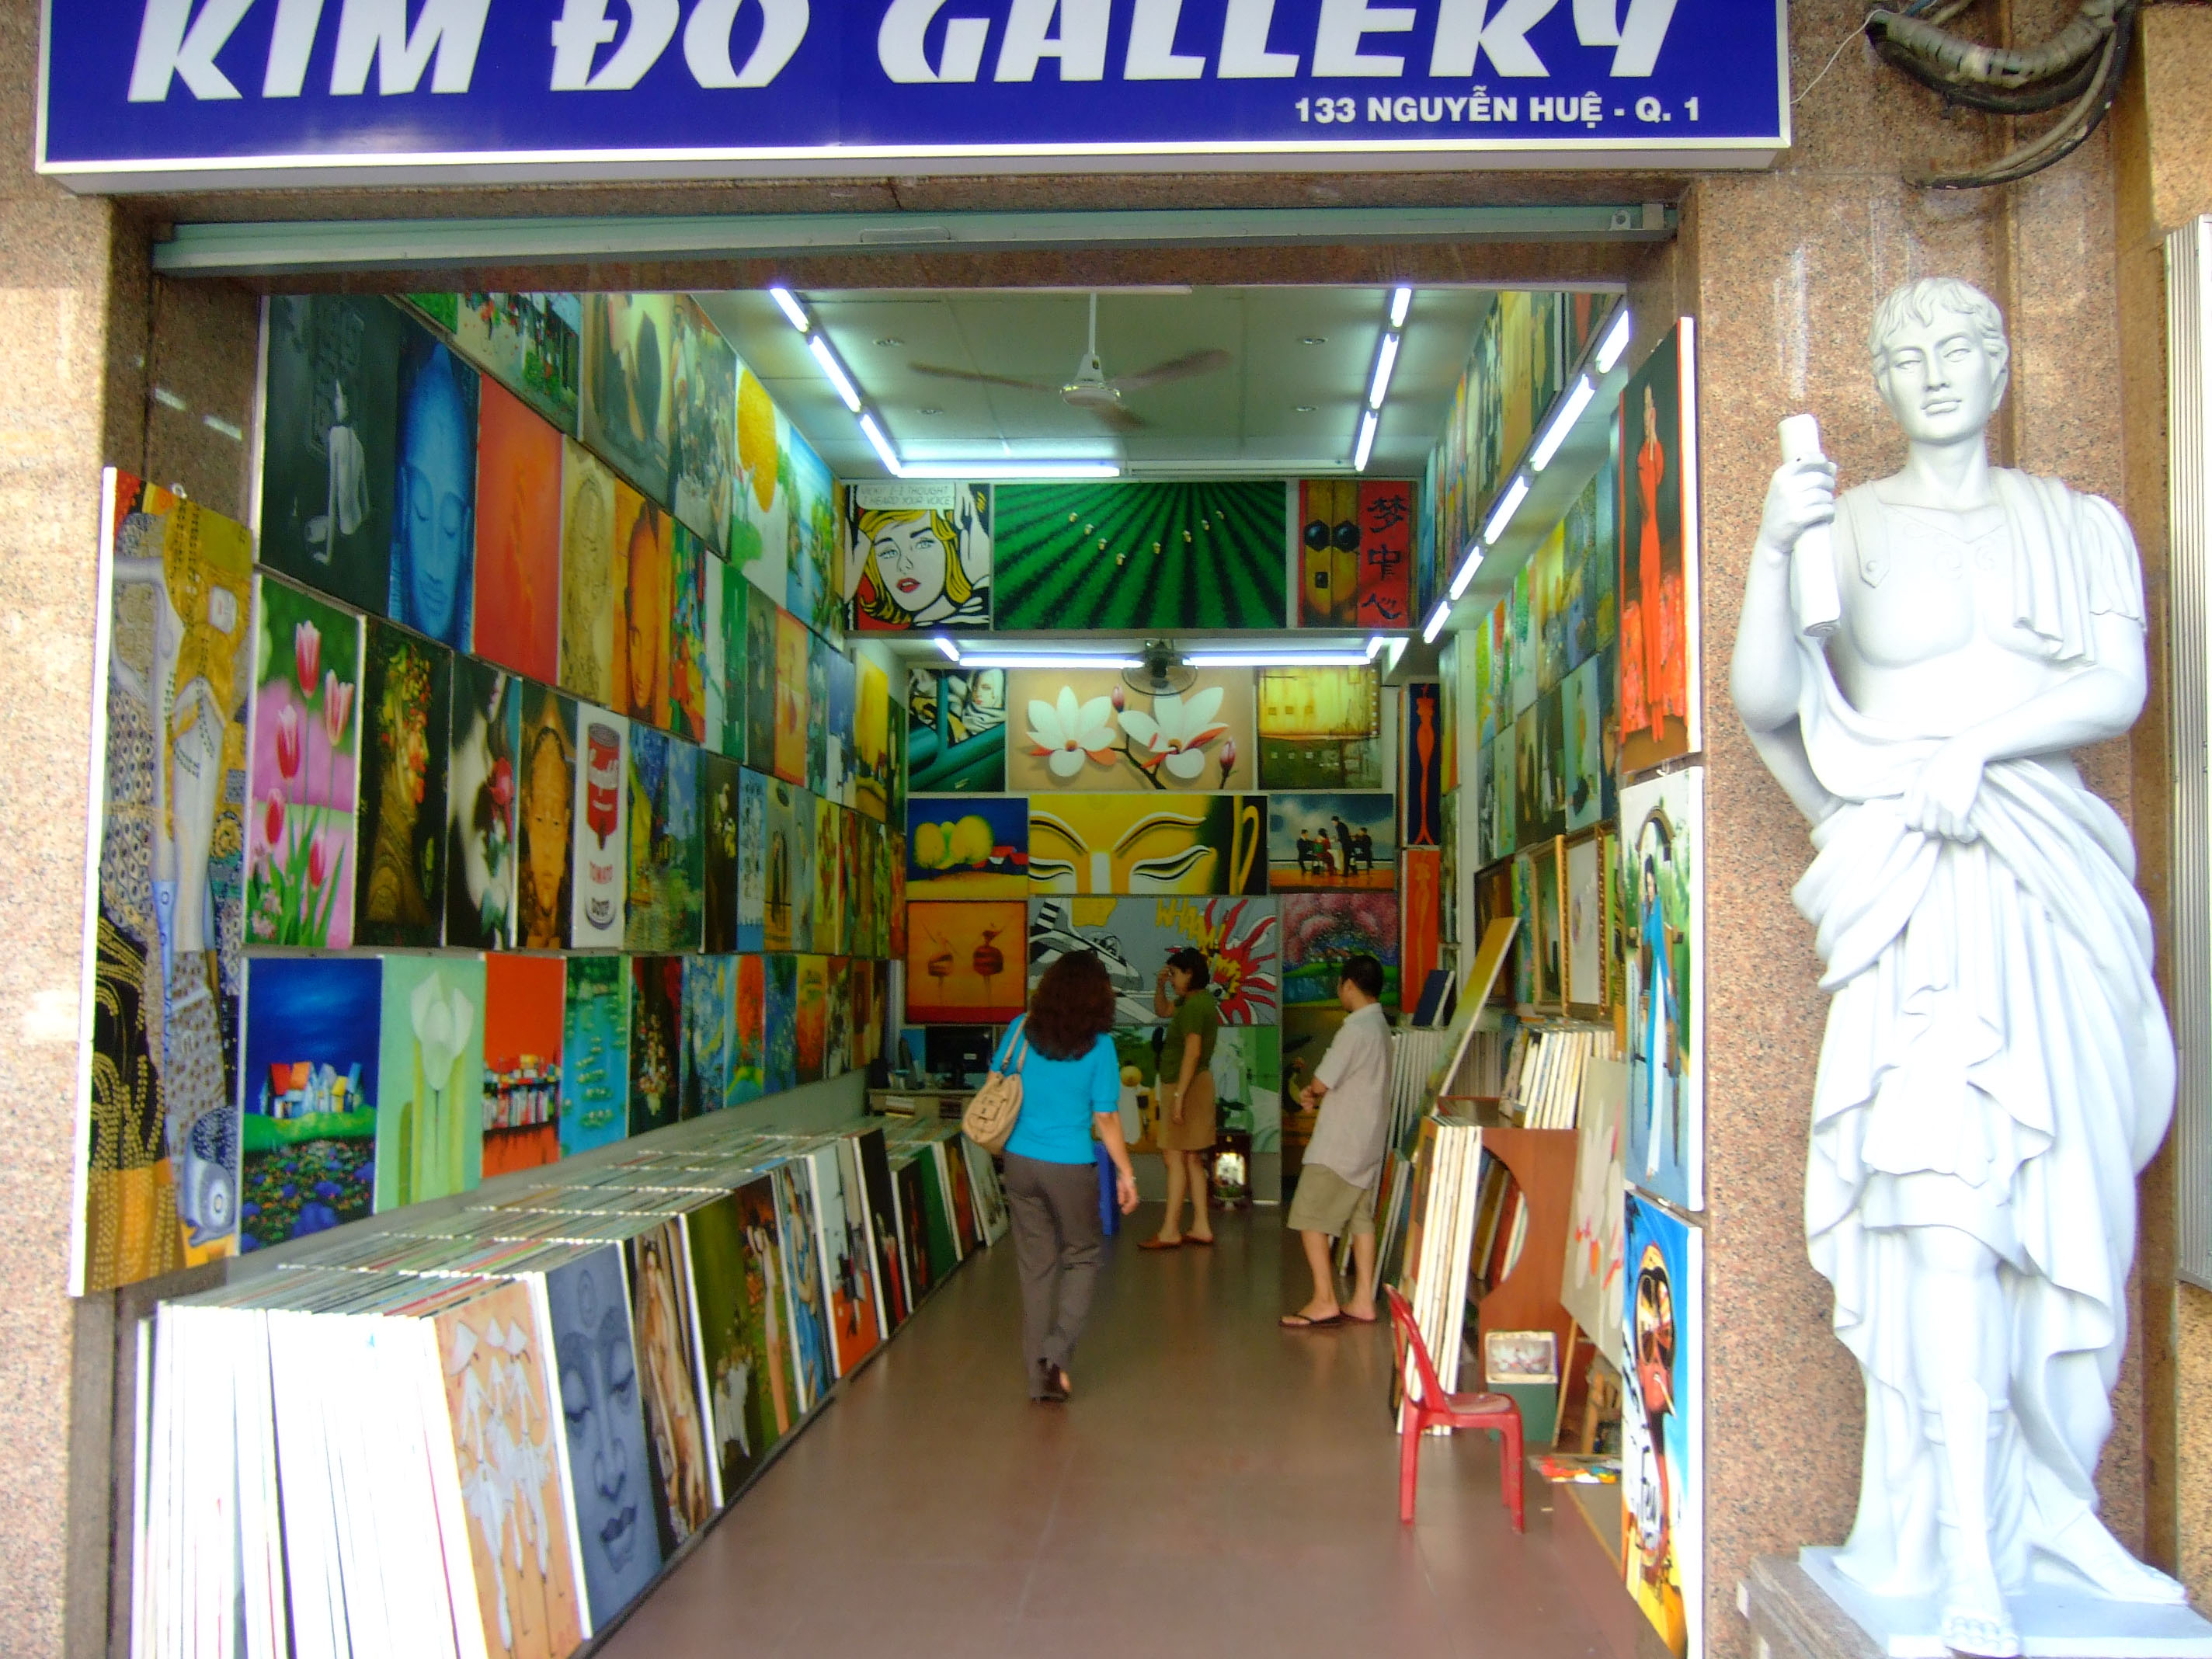 Saigon Ho Chi Minh city art scene Kim Do Gallery Feb 2009 01